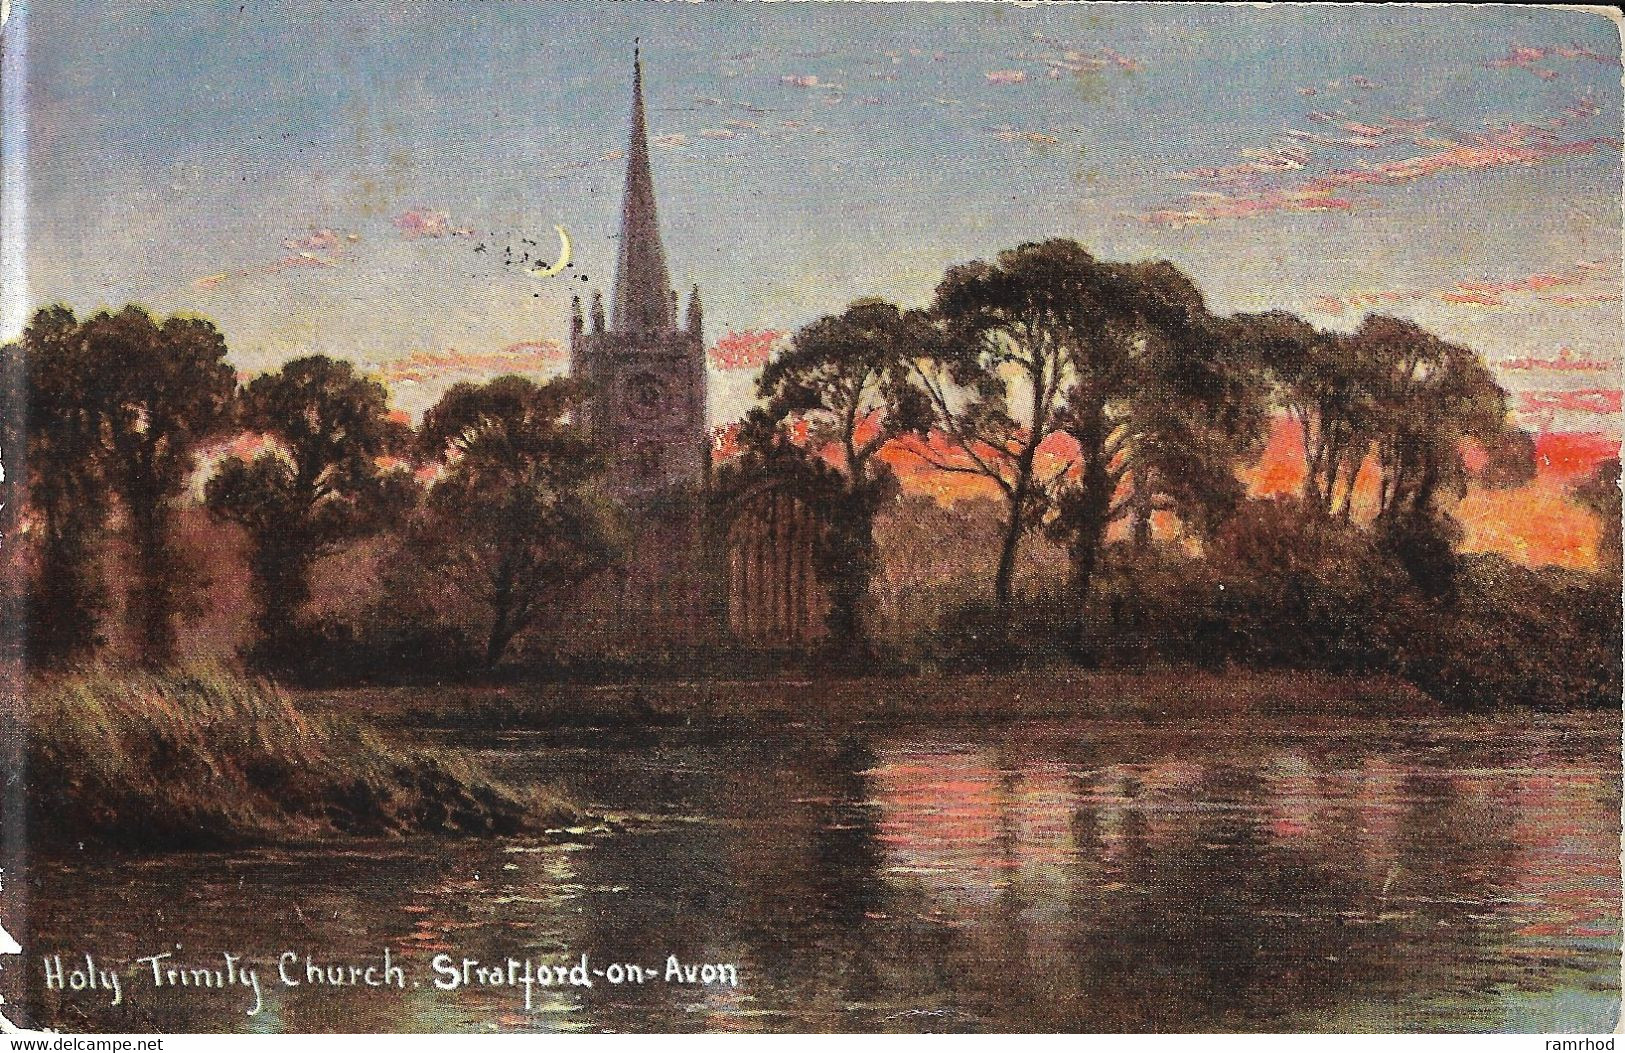 STRATFORD UPON AVON, Holy Trinity Church (Publisher - S Hildesheimer) Date - January 1907, Used - Stratford Upon Avon